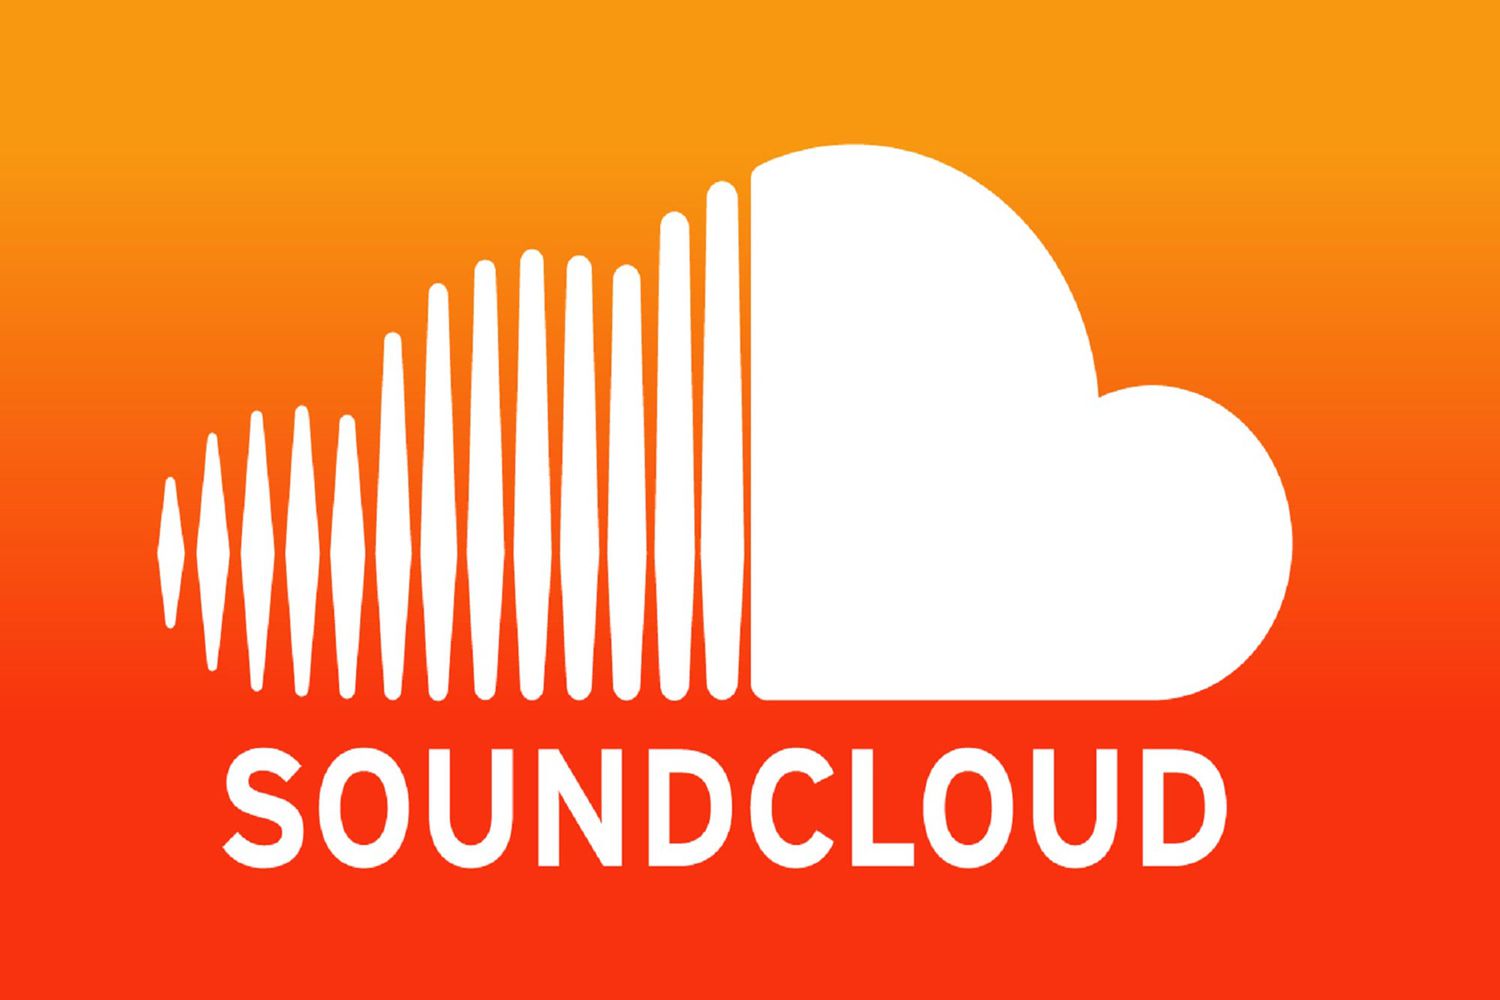 Podcast Hosting On Soundcloud